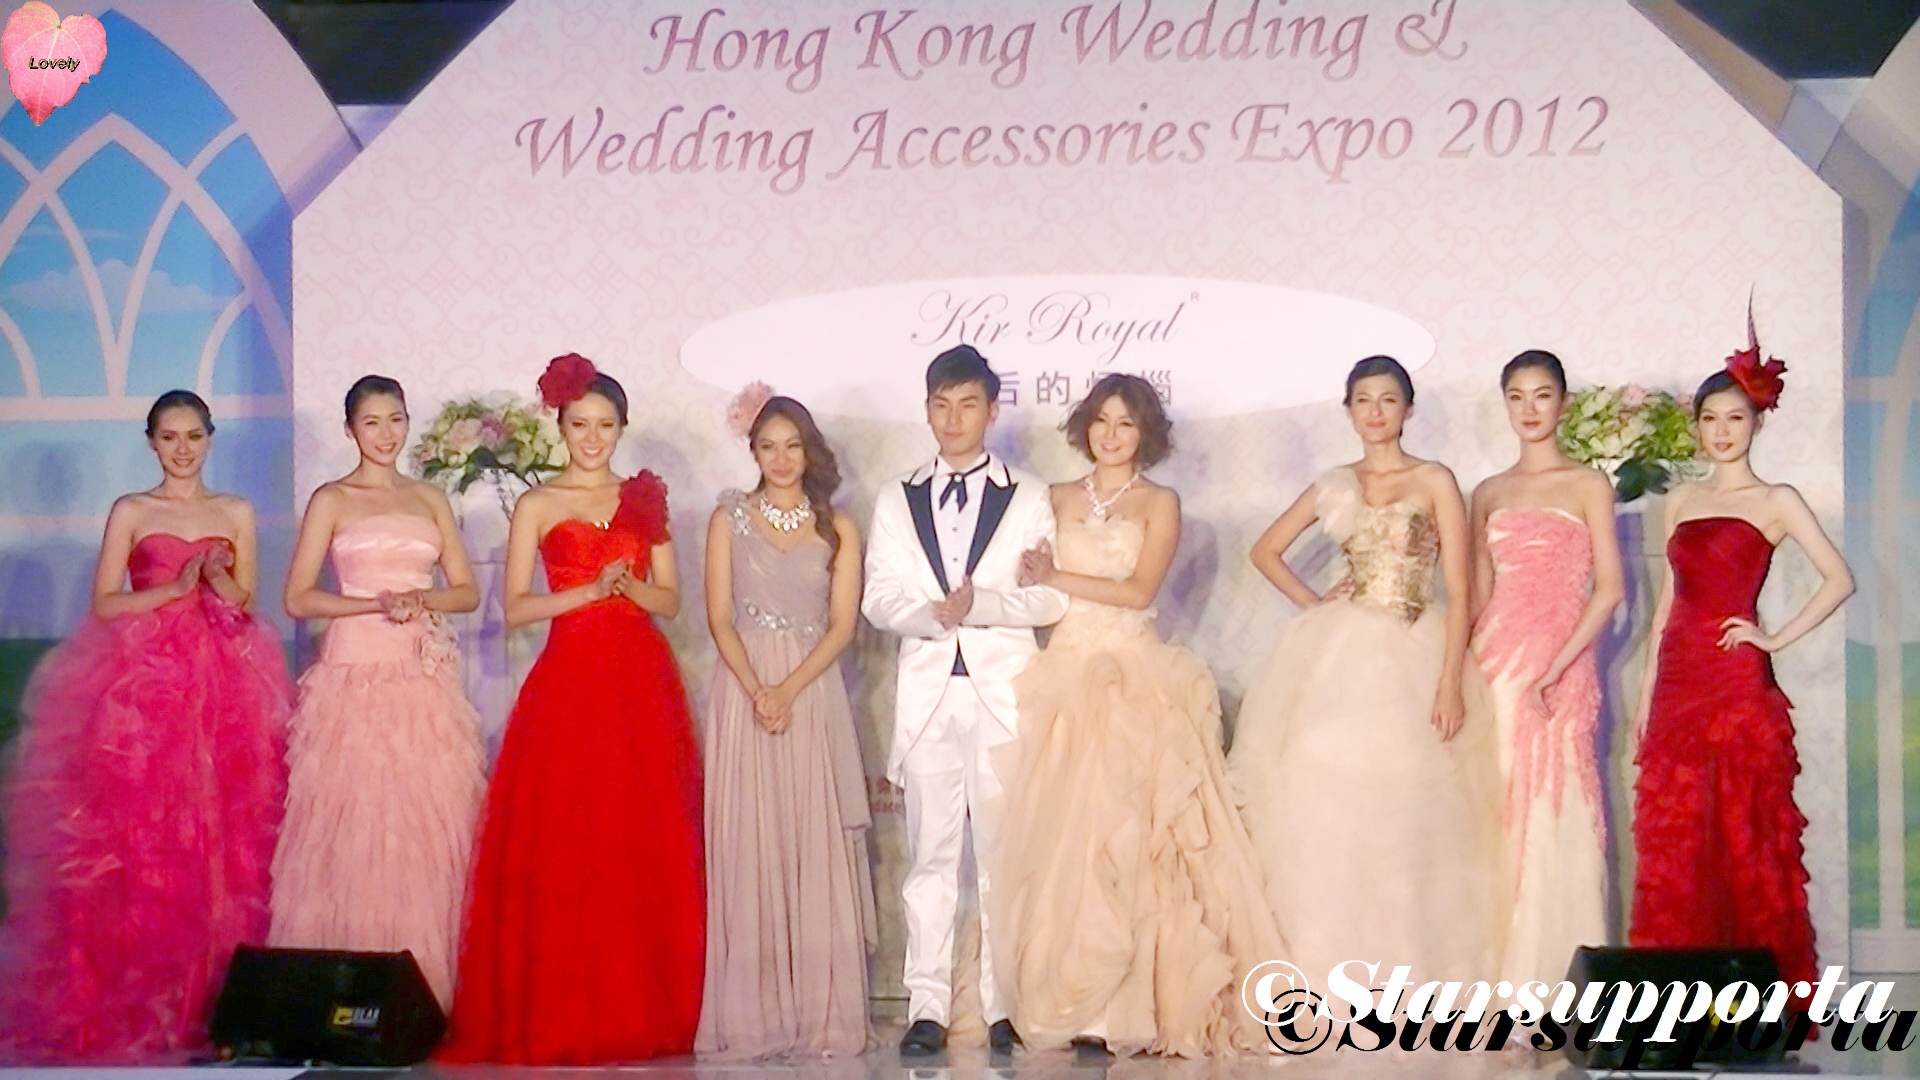 20120714 Hong Kong Wedding & Wedding Accessories Expo - Kir Royal: 皇后的煩惱婚紗晚裝表演 @ 香港會議展覽中心 HKCEC (video)